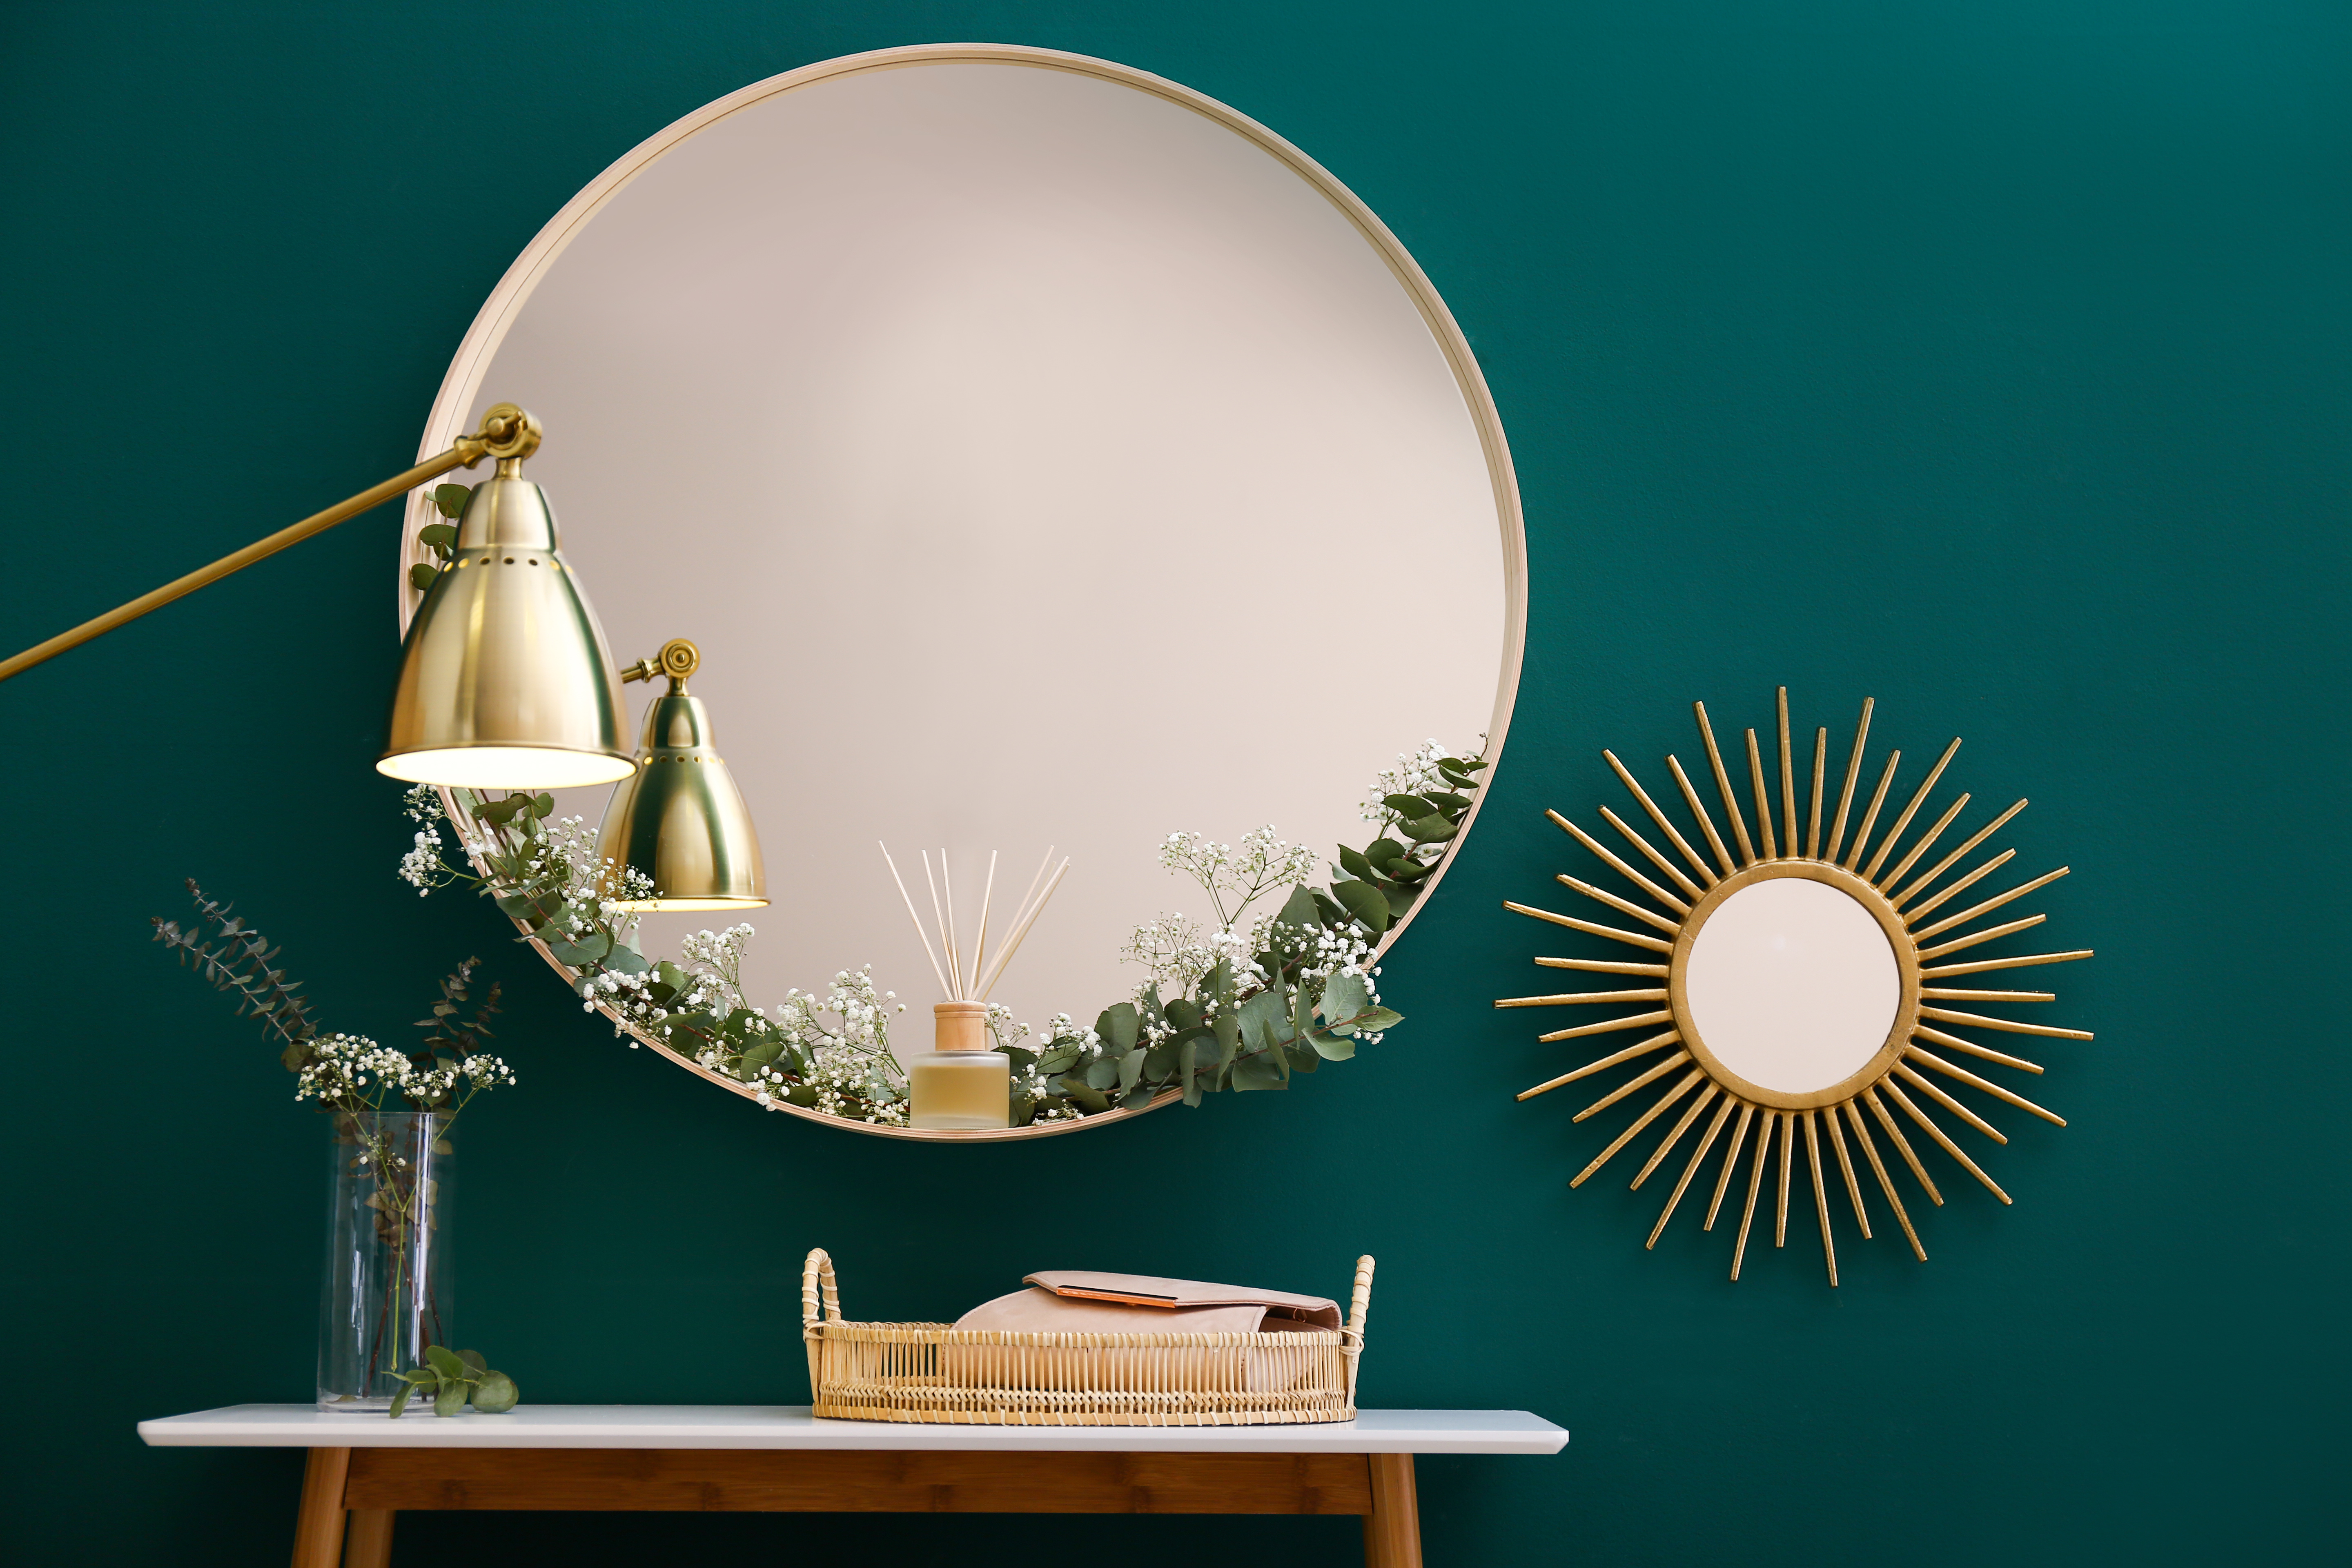 Art Deco interior design gold frame mirrors teal wall colour